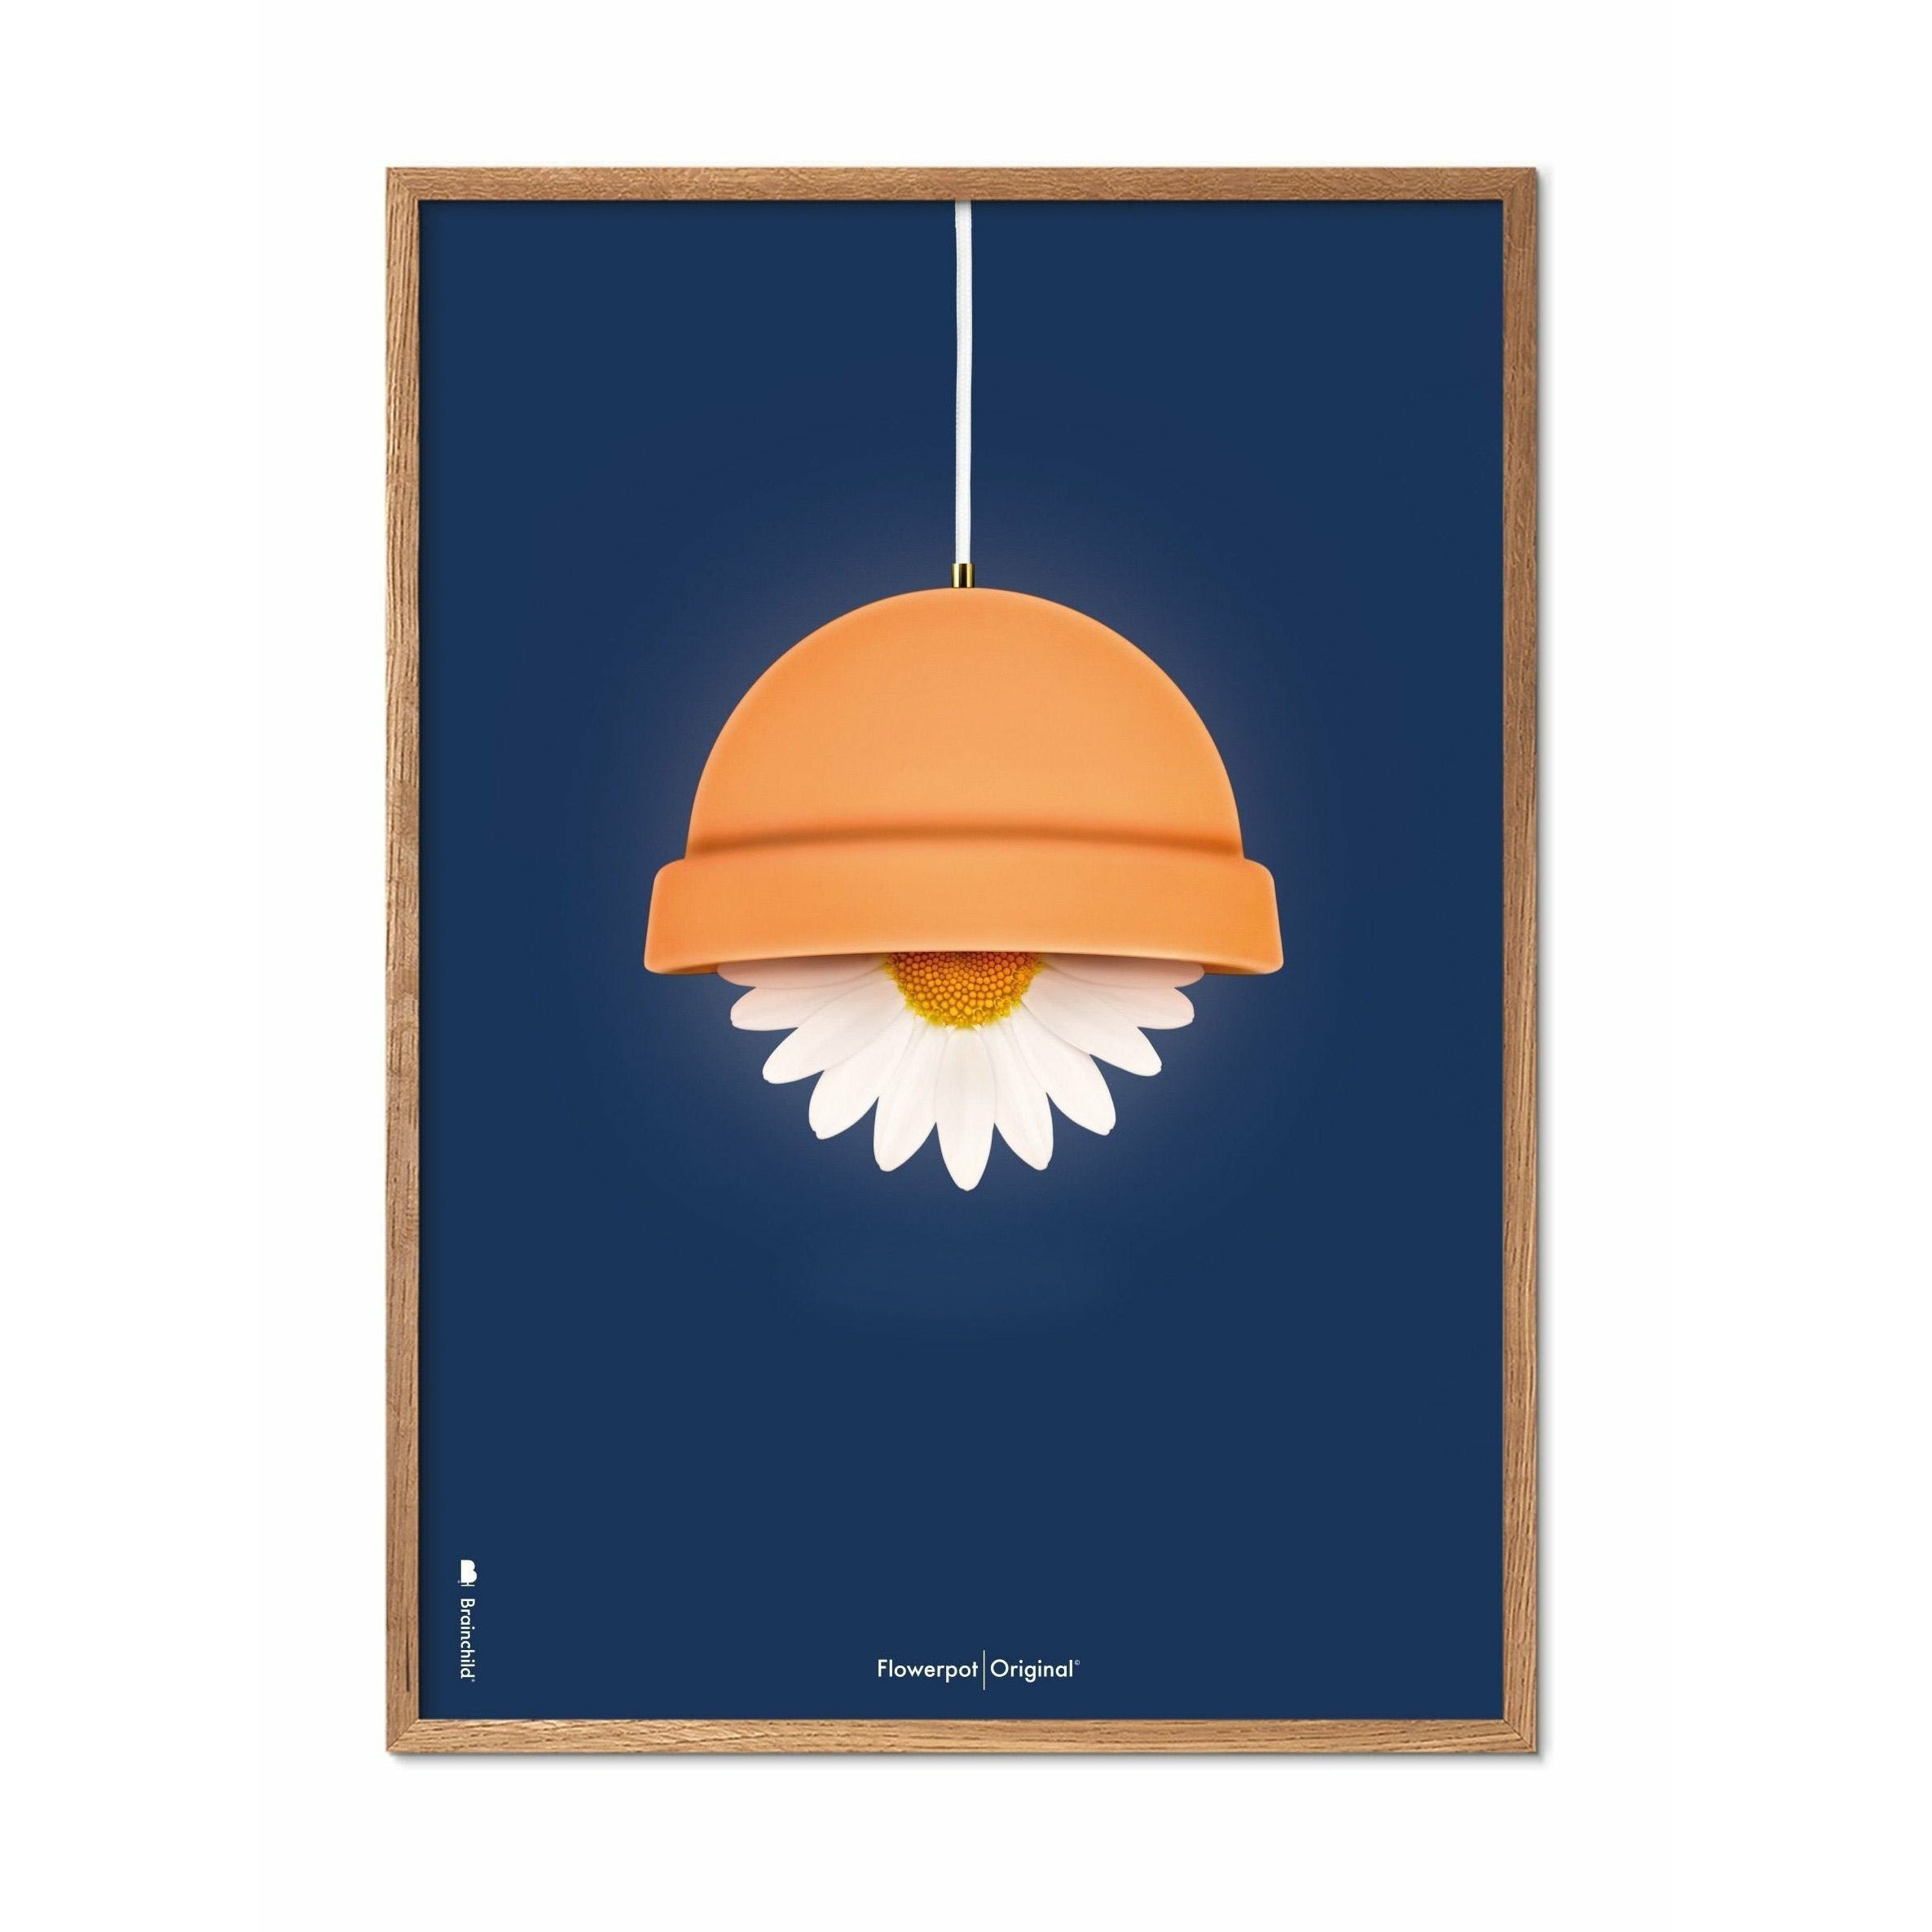 Brainchild Flowerpot Classic Poster, Frame Made Of Light Wood 70x100 Cm, Dark Blue Background